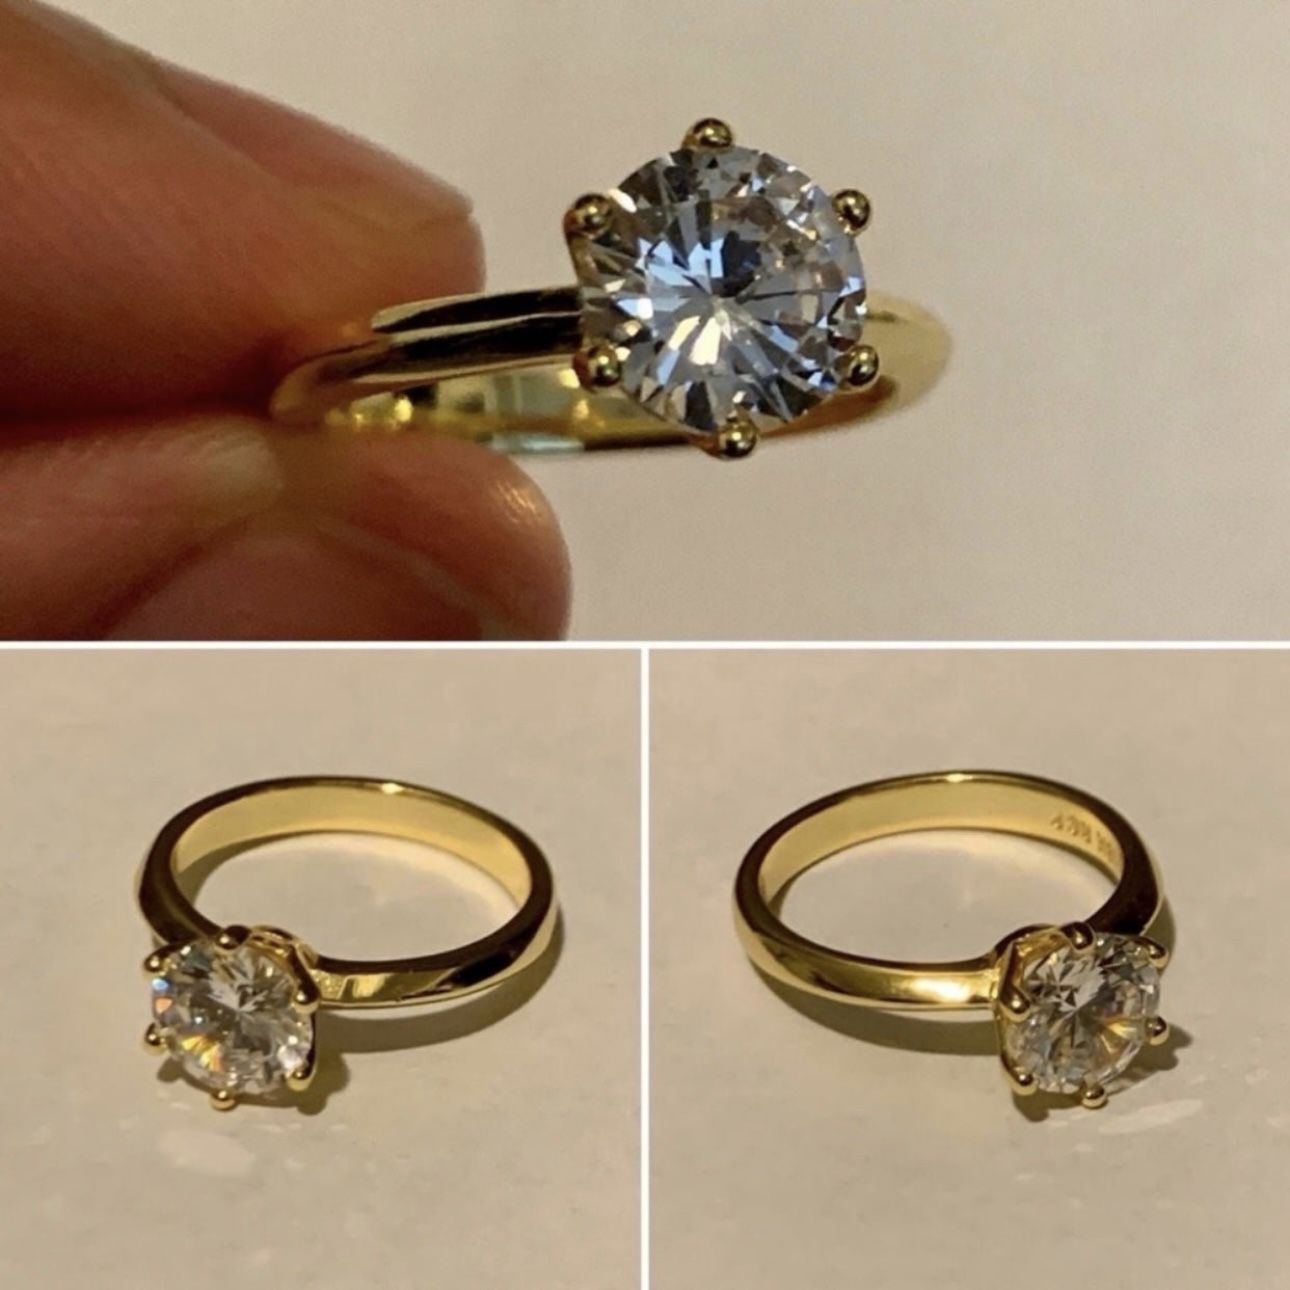 18K Yellow Gold Diamond Ring Size 6